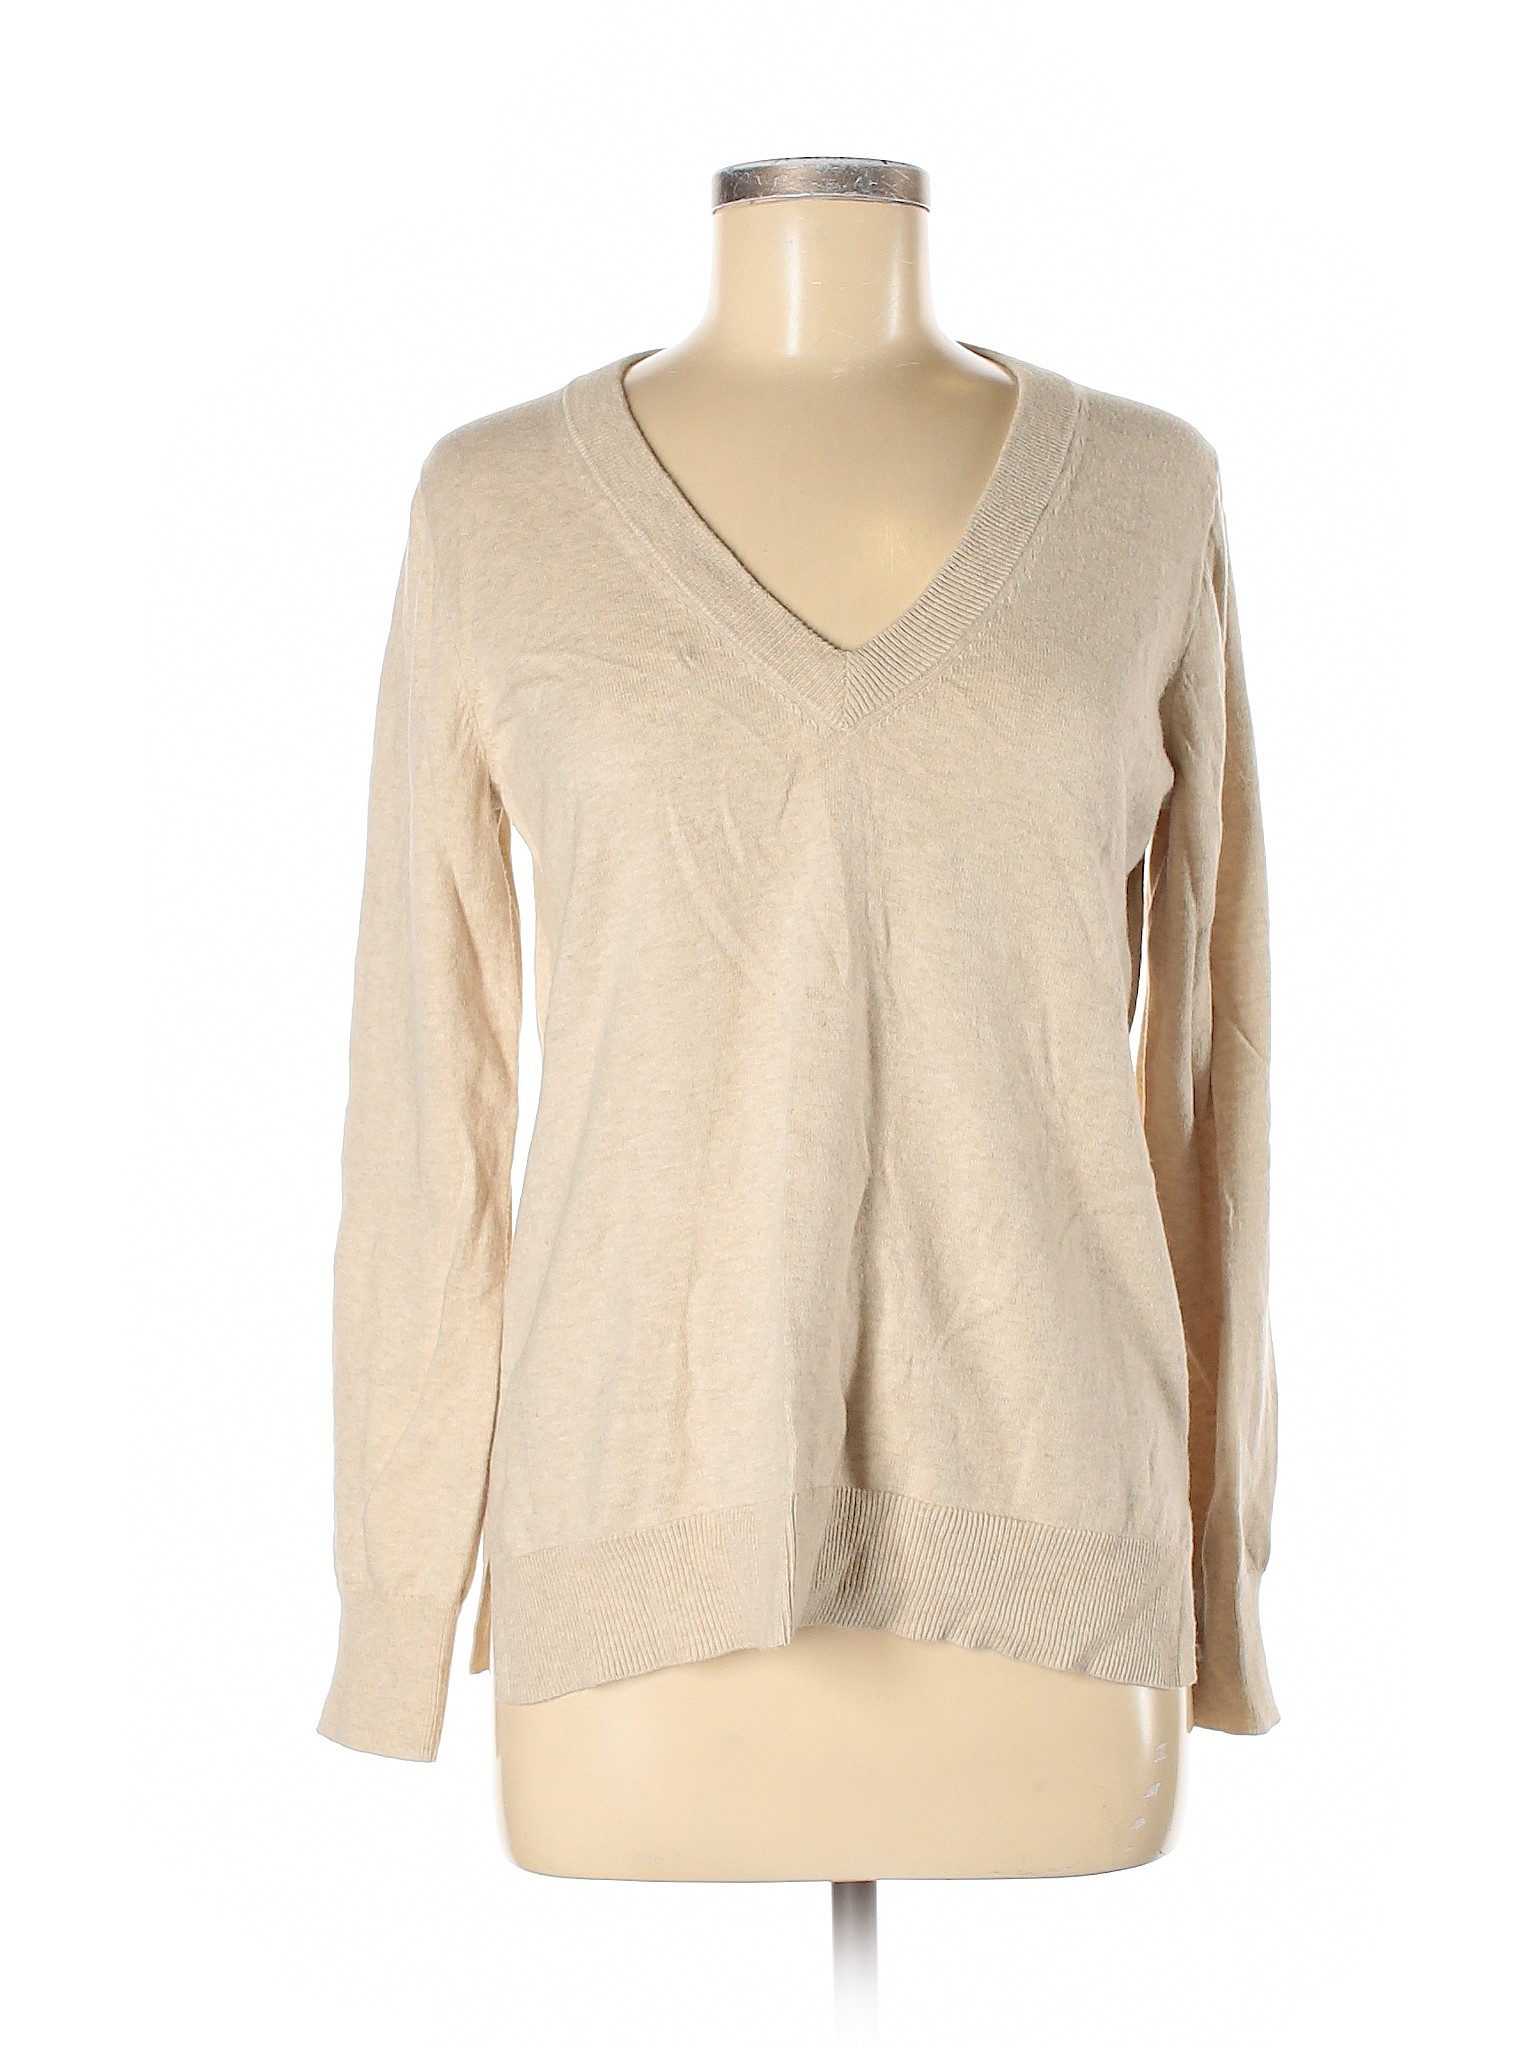 J.Crew Mercantile Women Brown Pullover Sweater M | eBay